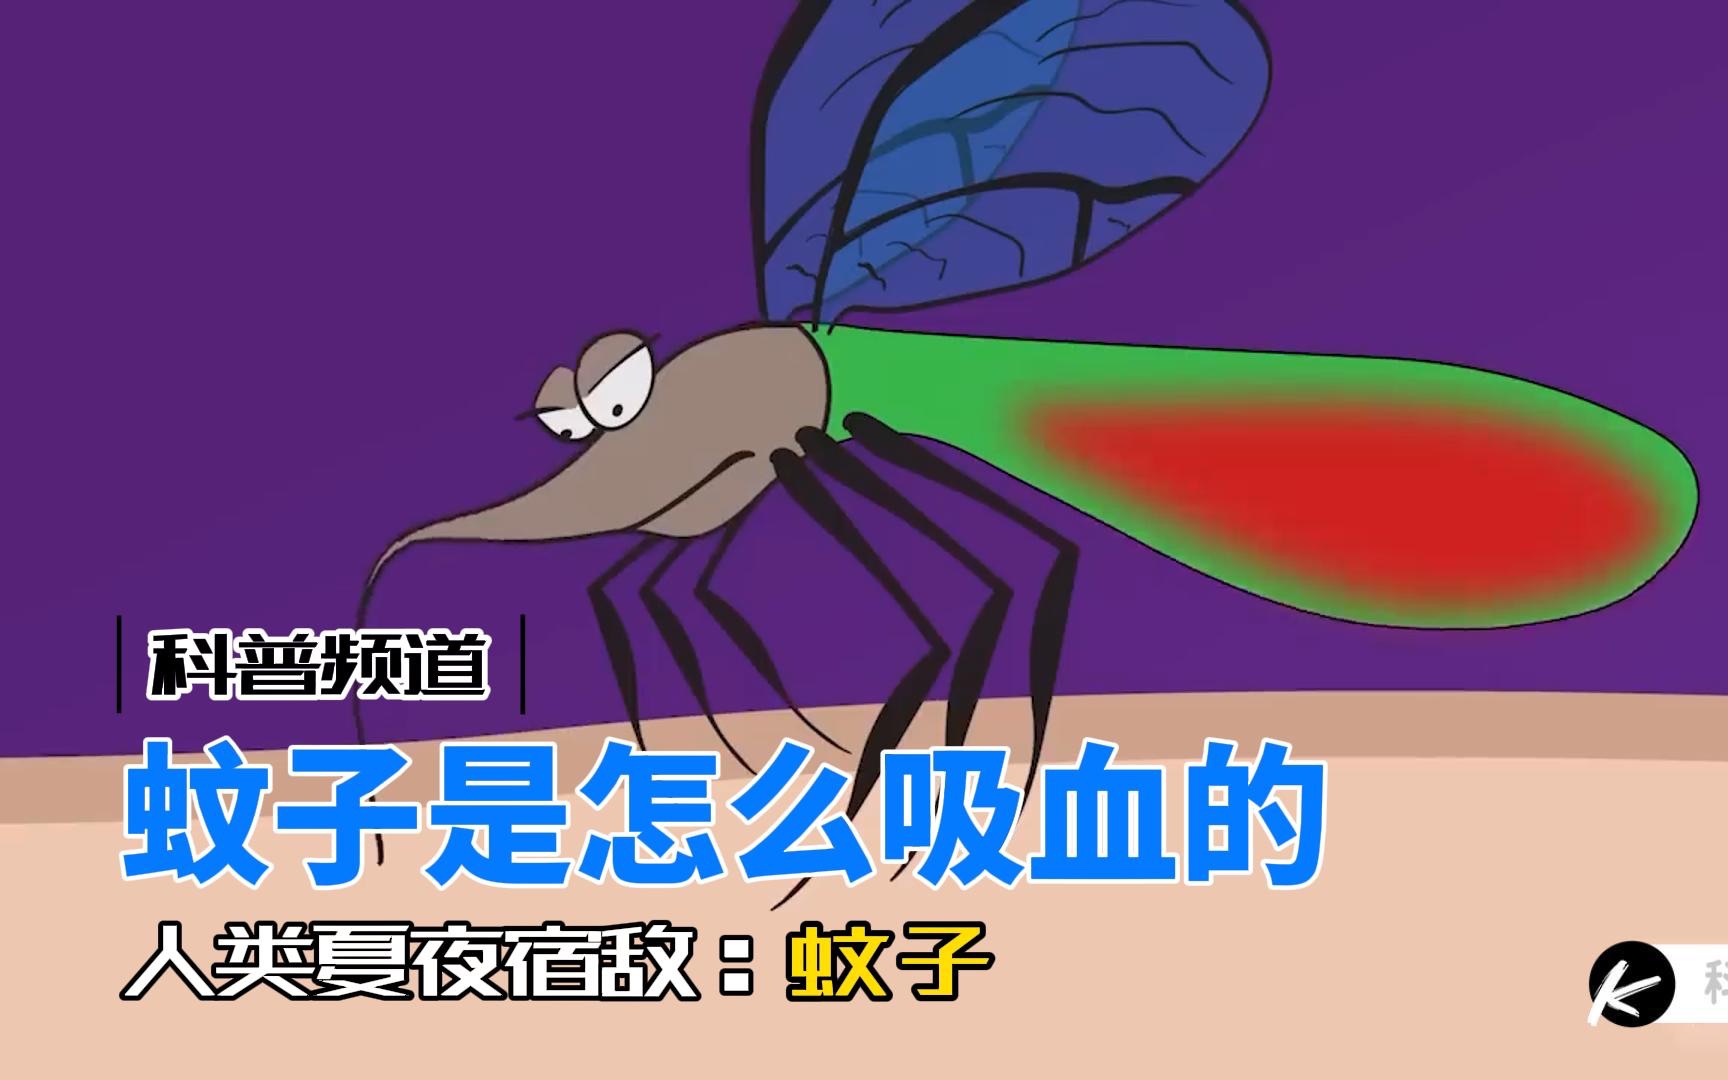 Download Video: 蚊子吸血的原理